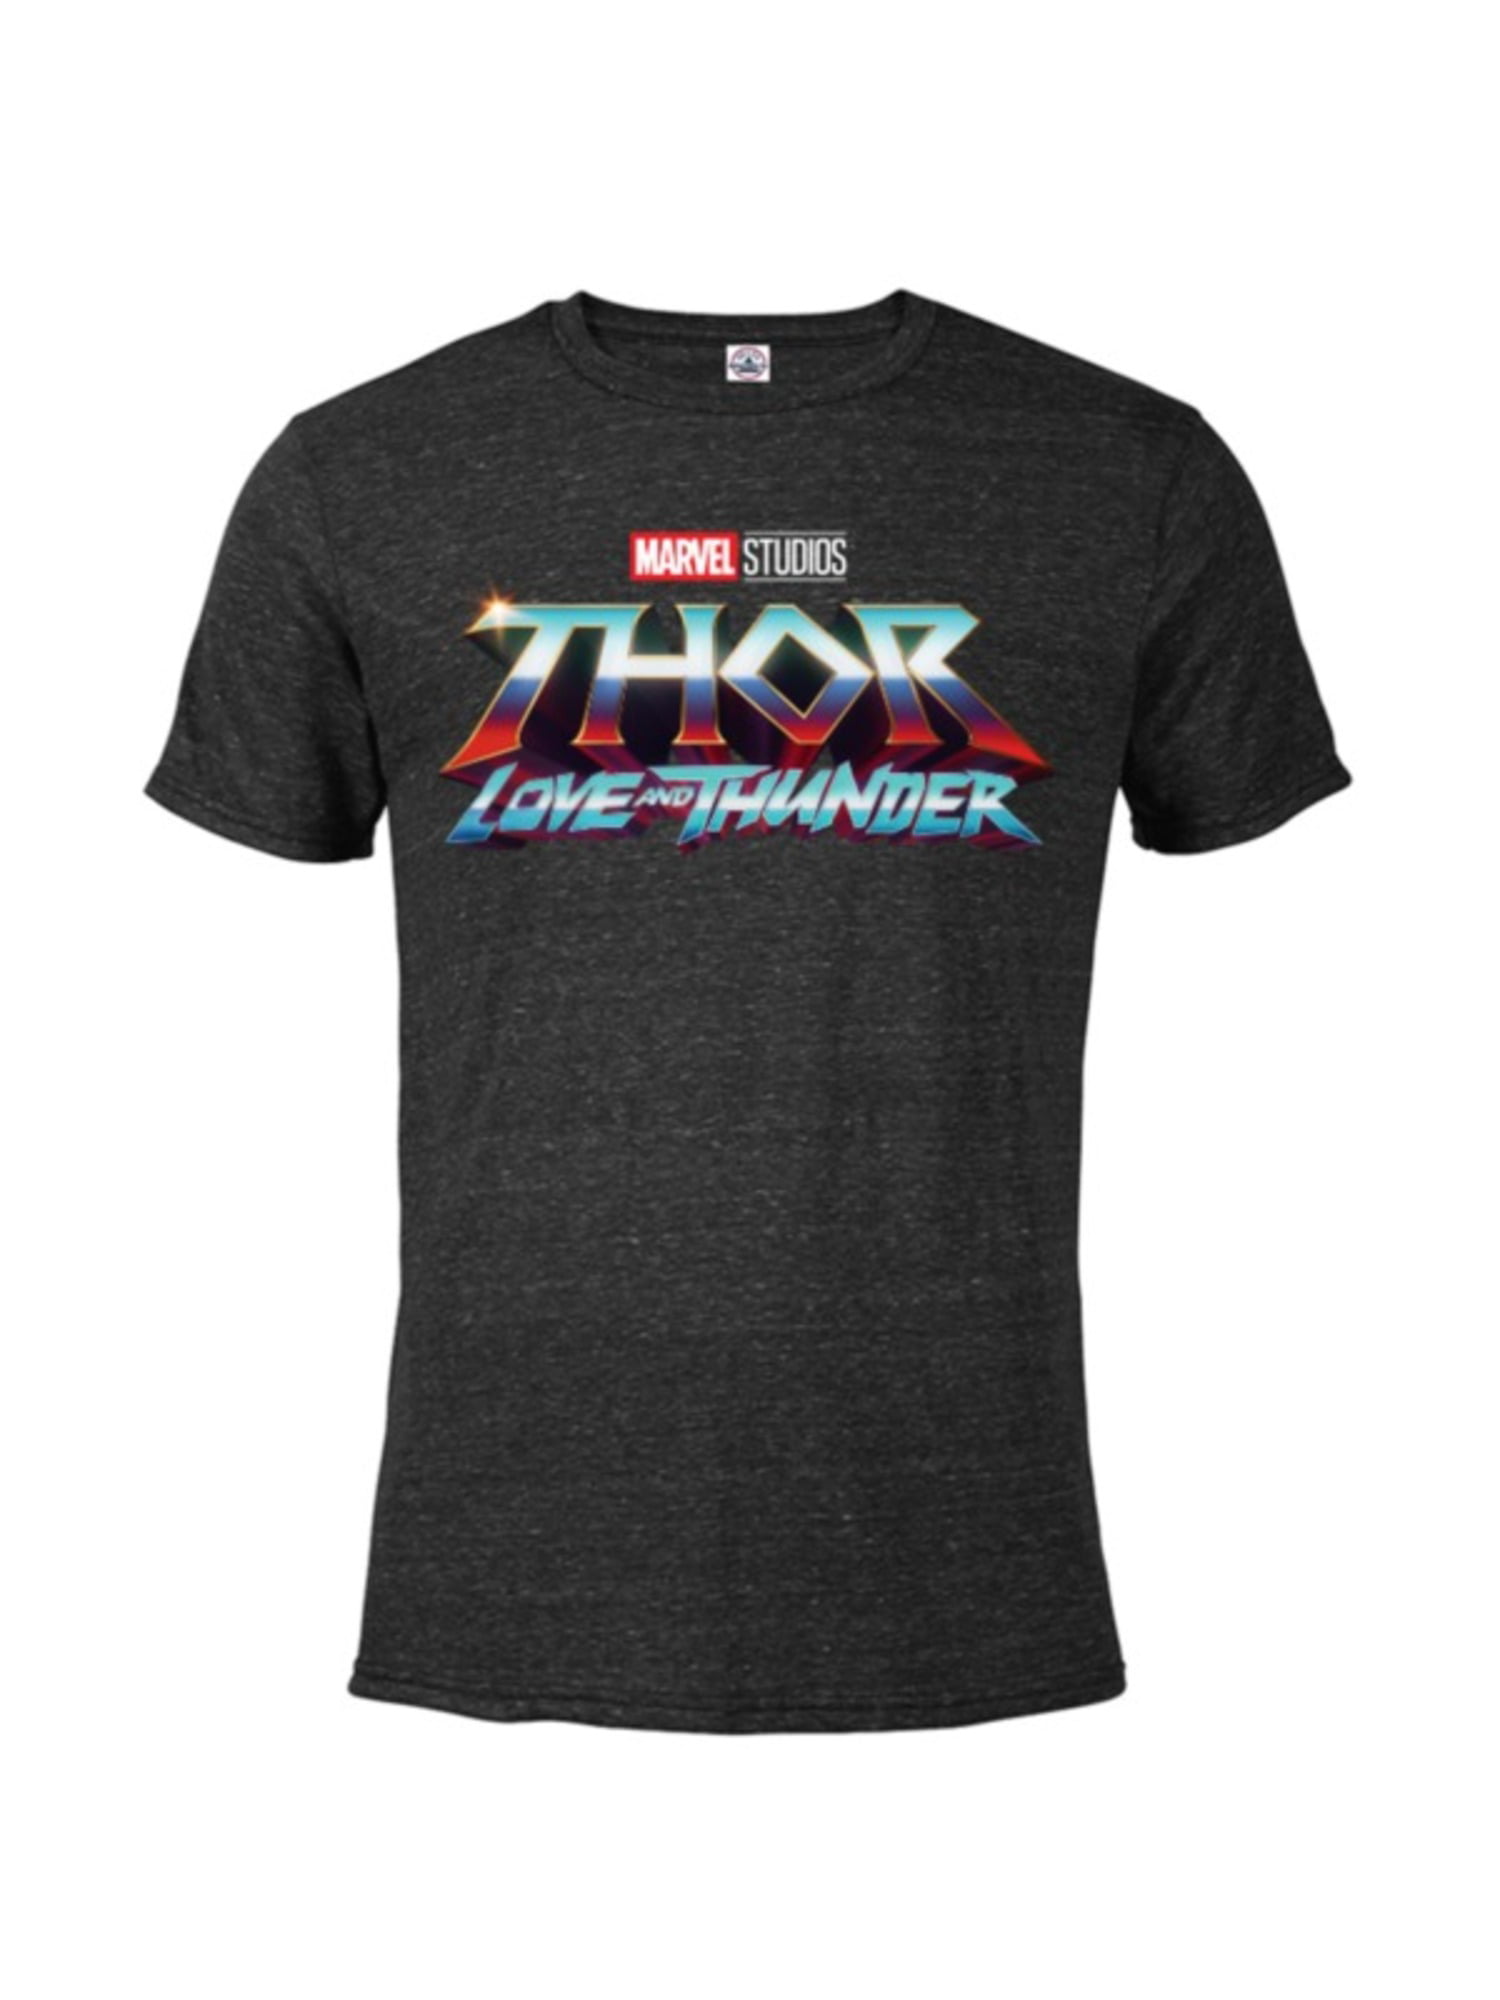 New Days Of Thunder Movie 1 New T shirt S-5XL 